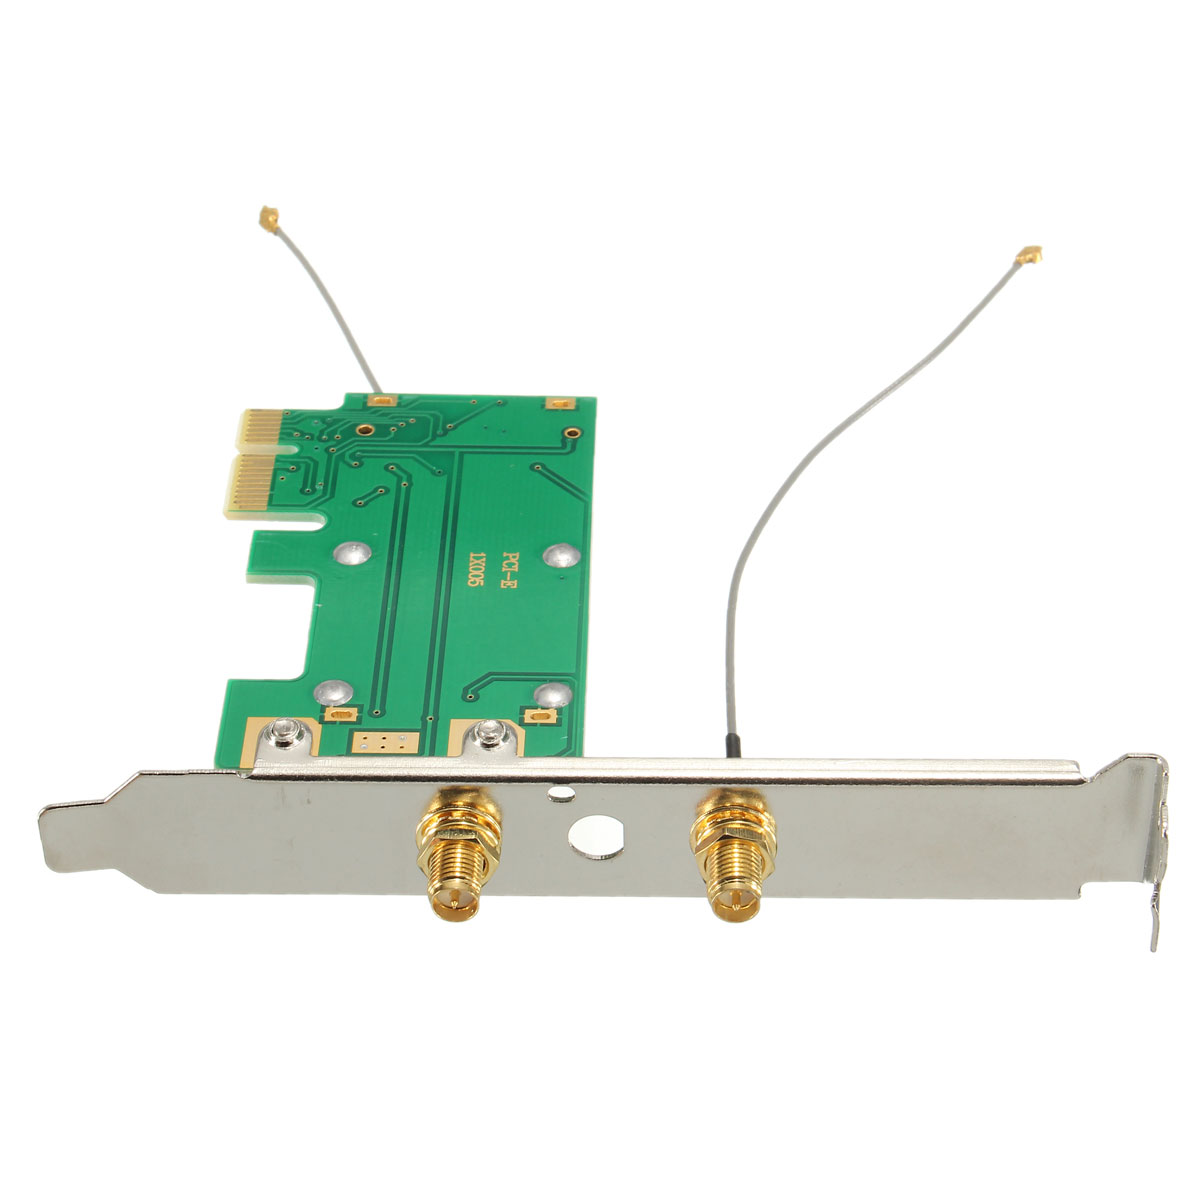 Mini-WiFi-Wan-80211n-PCI-e-to-PCI-e-Wireless-Expansion-Card-Adapter-Convertor-1013592